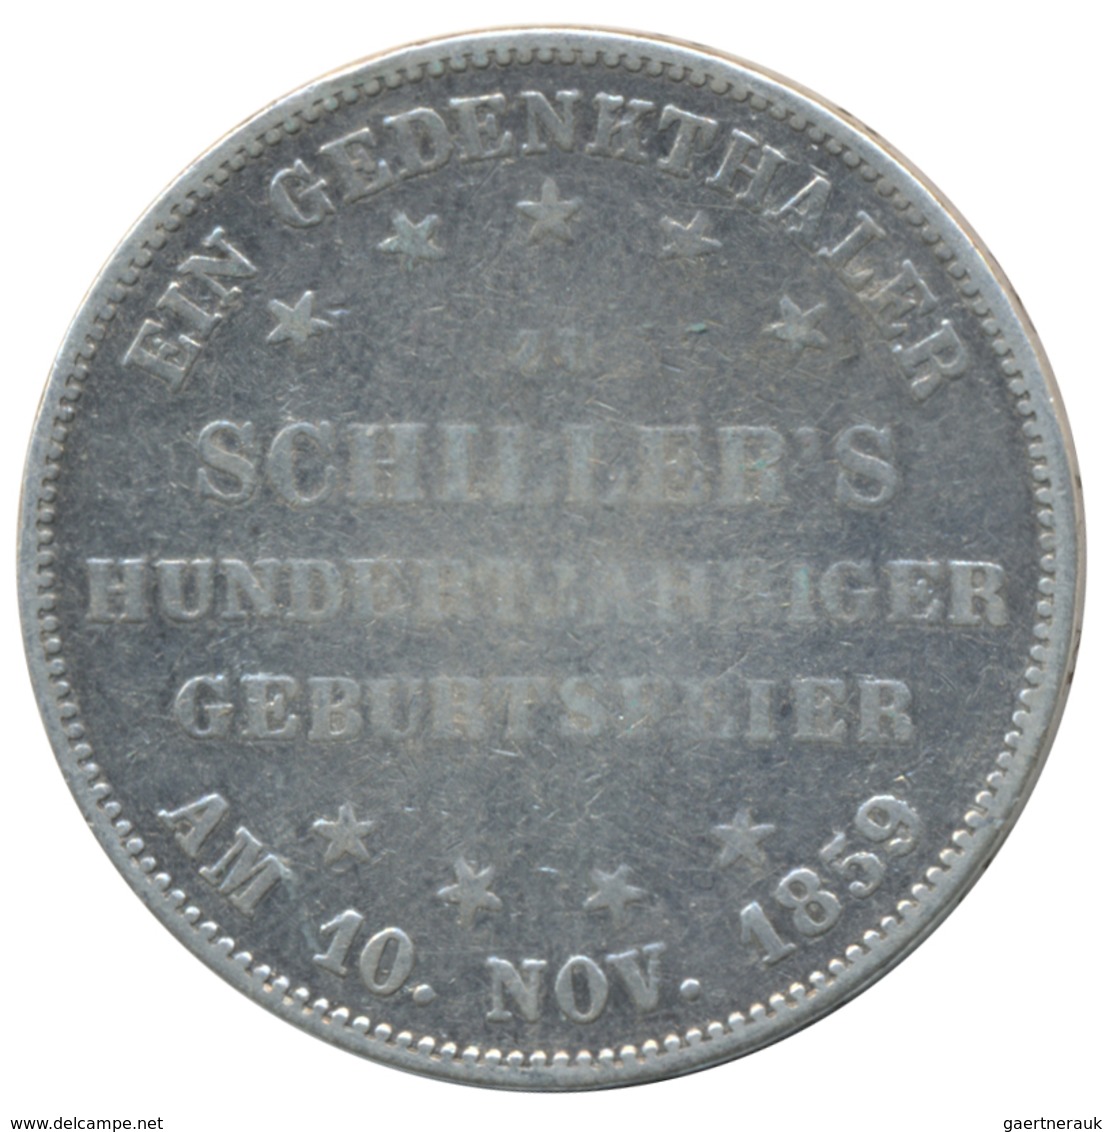 Frankfurt am Main: Lot 5 Stück; Doppeltaler 1866, Vereinstaler 1860 + 1865, Gedenktaler 1859 Schille